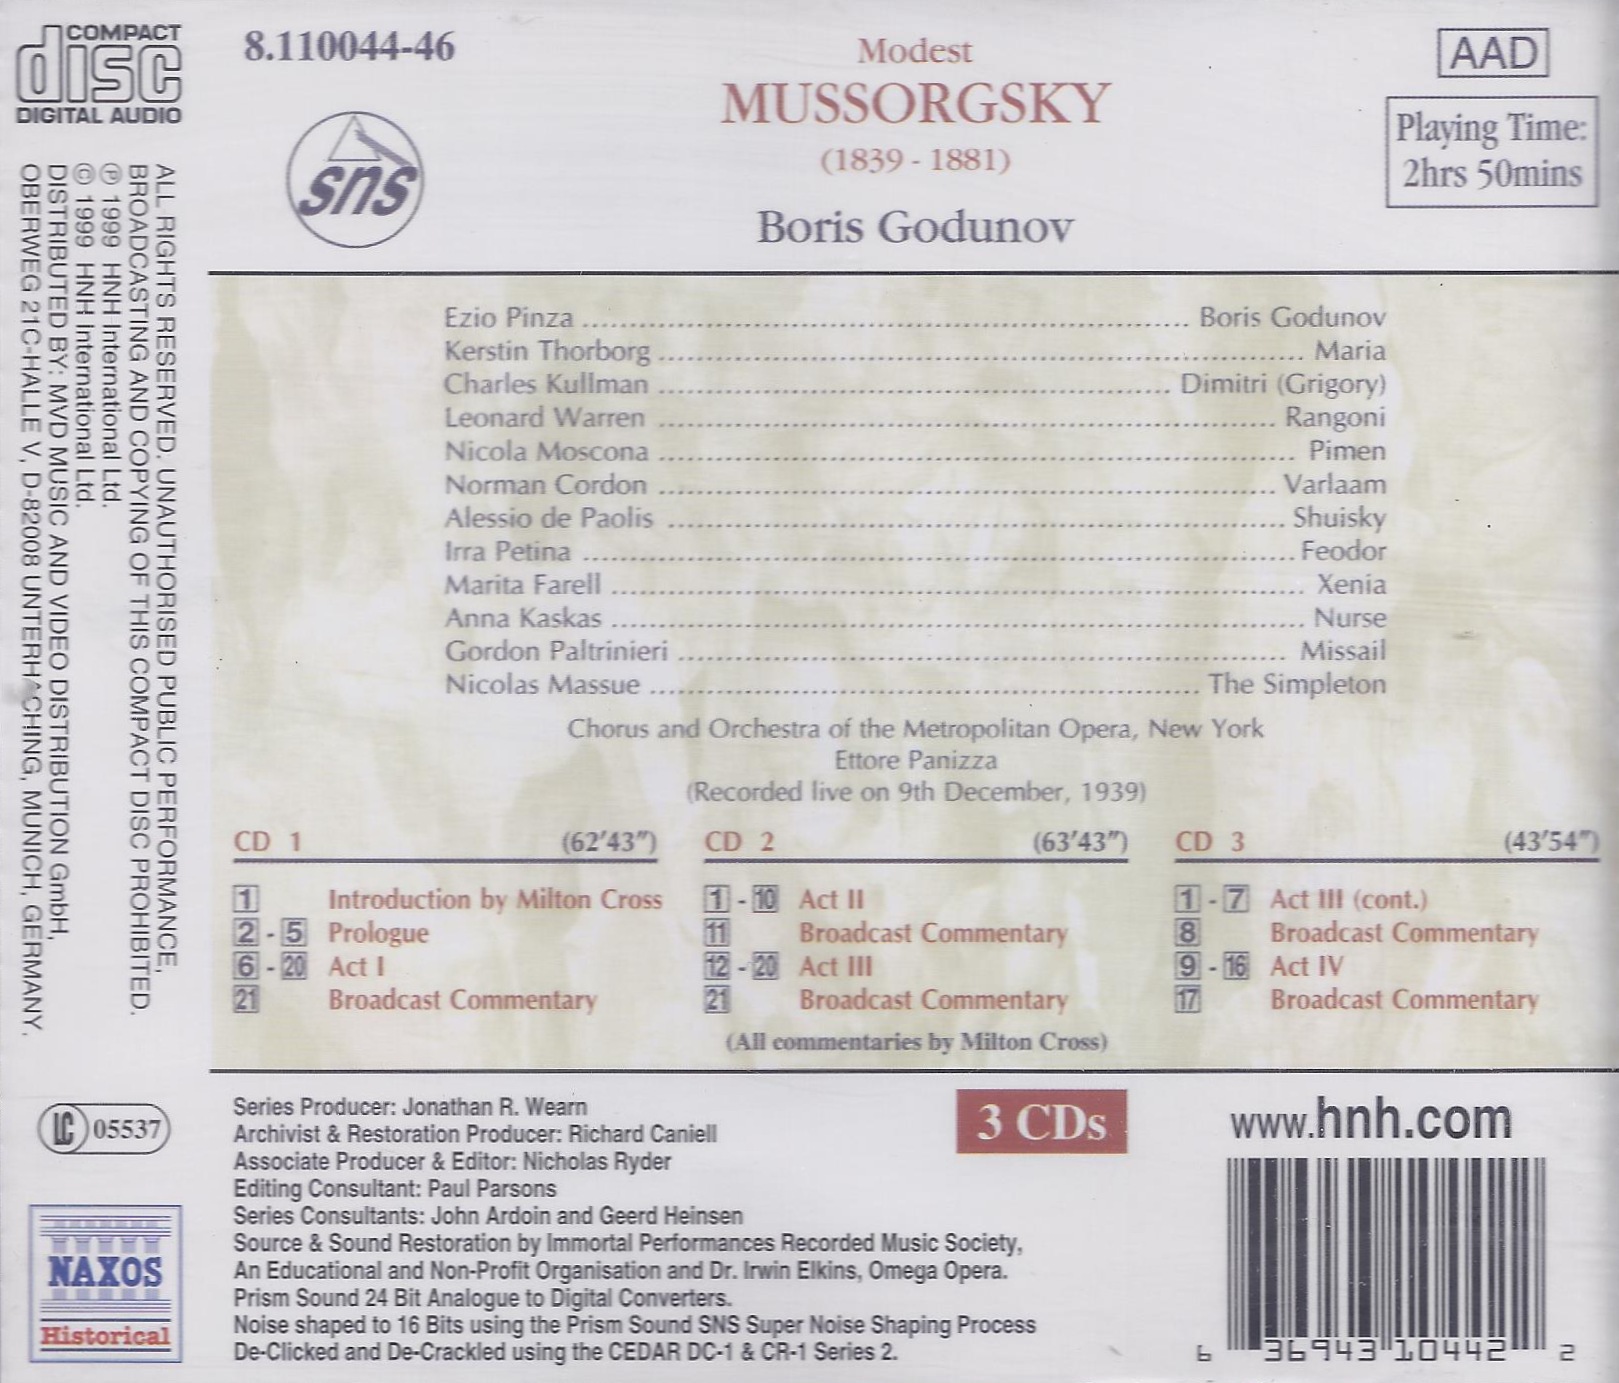 MUSSORGSKY: Boris Godunov - slide-1